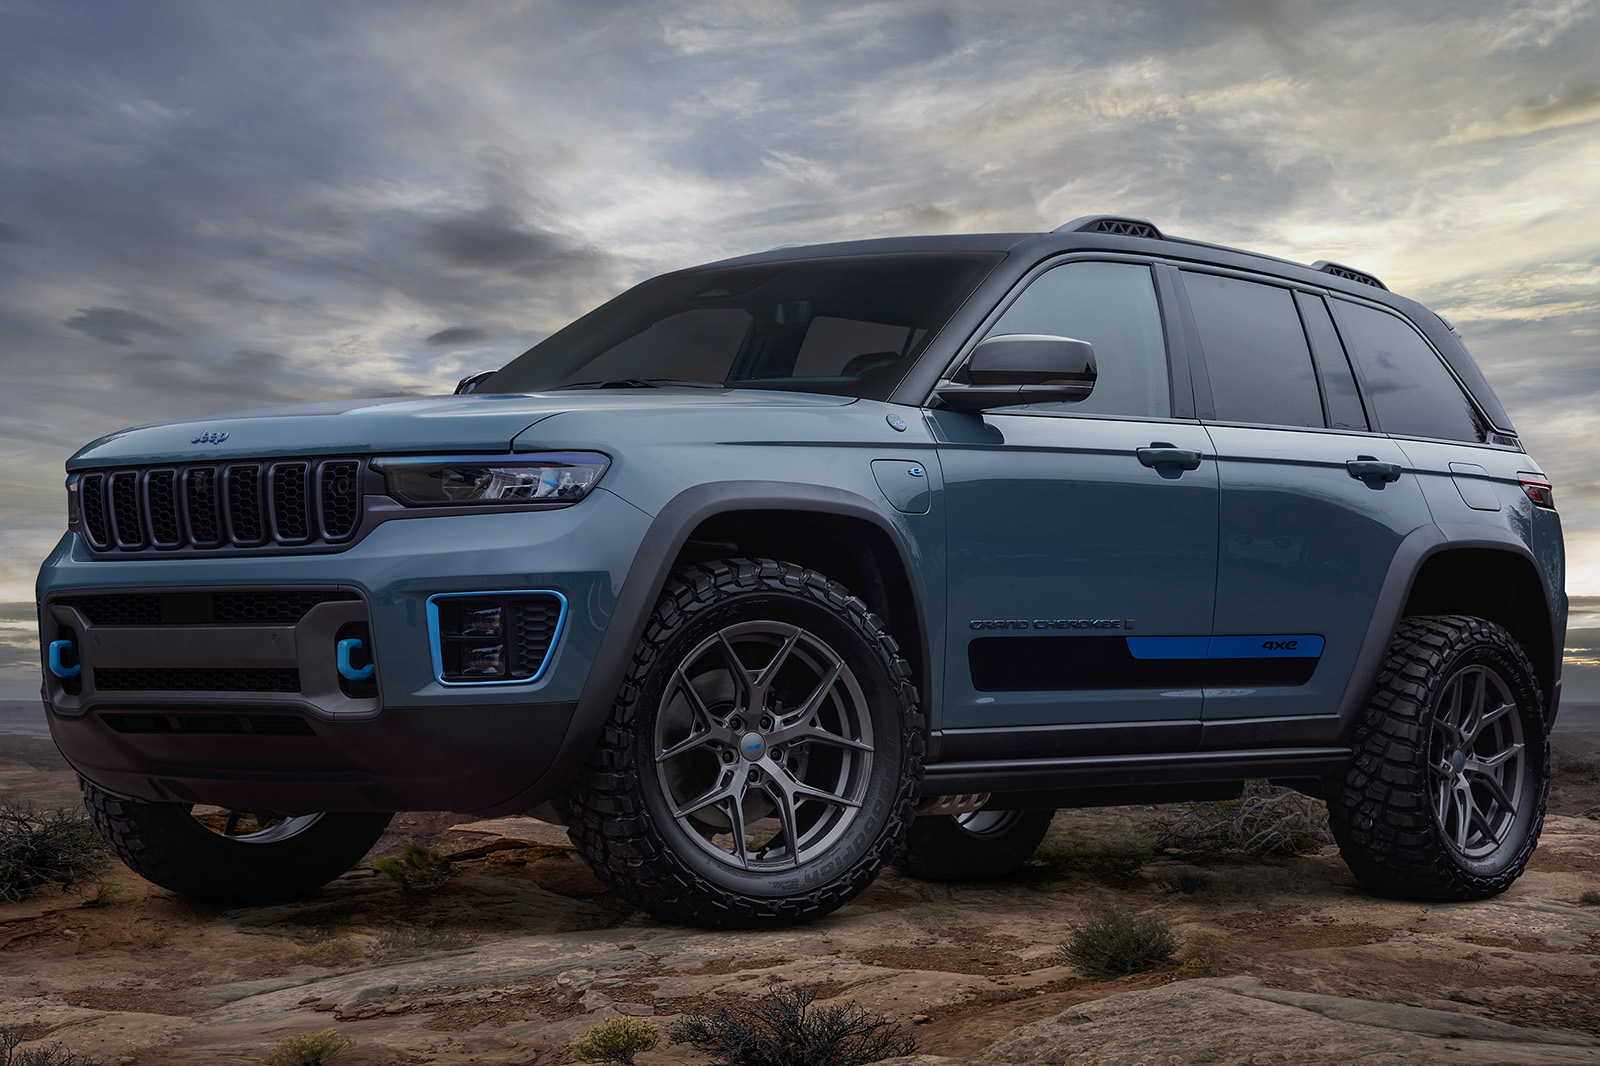 Jeep reveals six new concepts alongside updated Magneto EV | Autocar